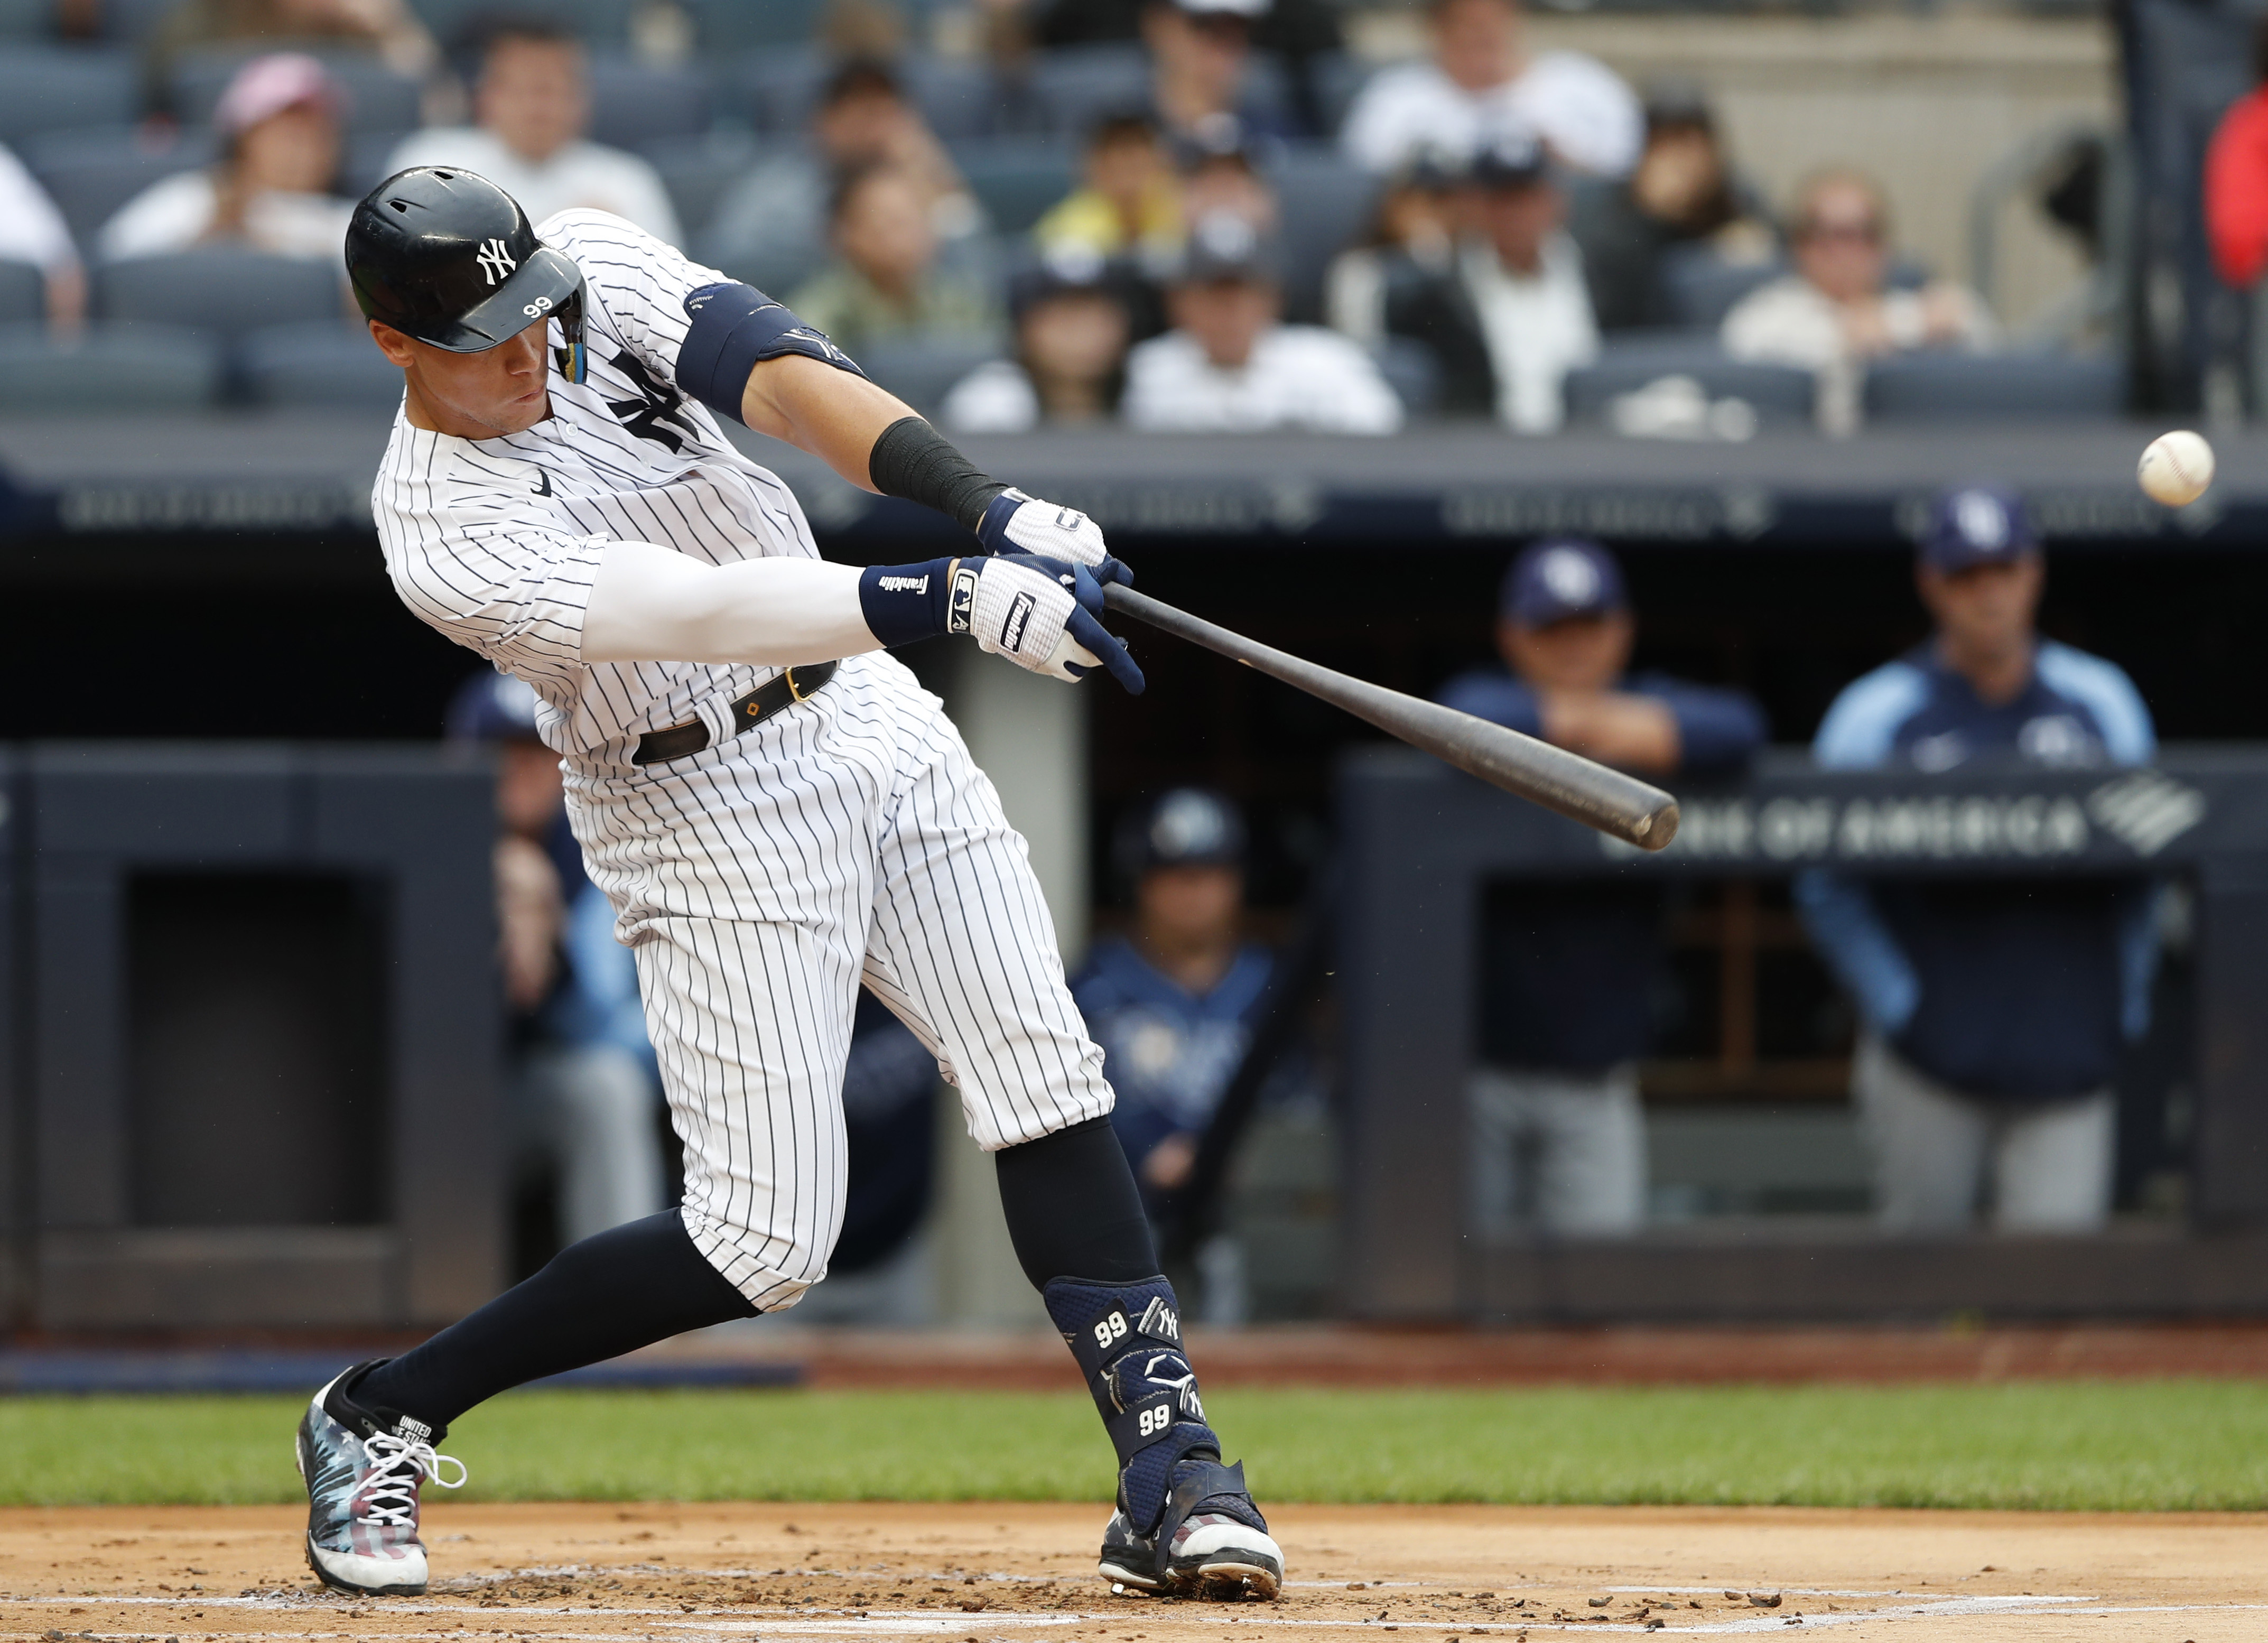 Ex-home run champ predicts Yankees' Aaron Judge will challenge